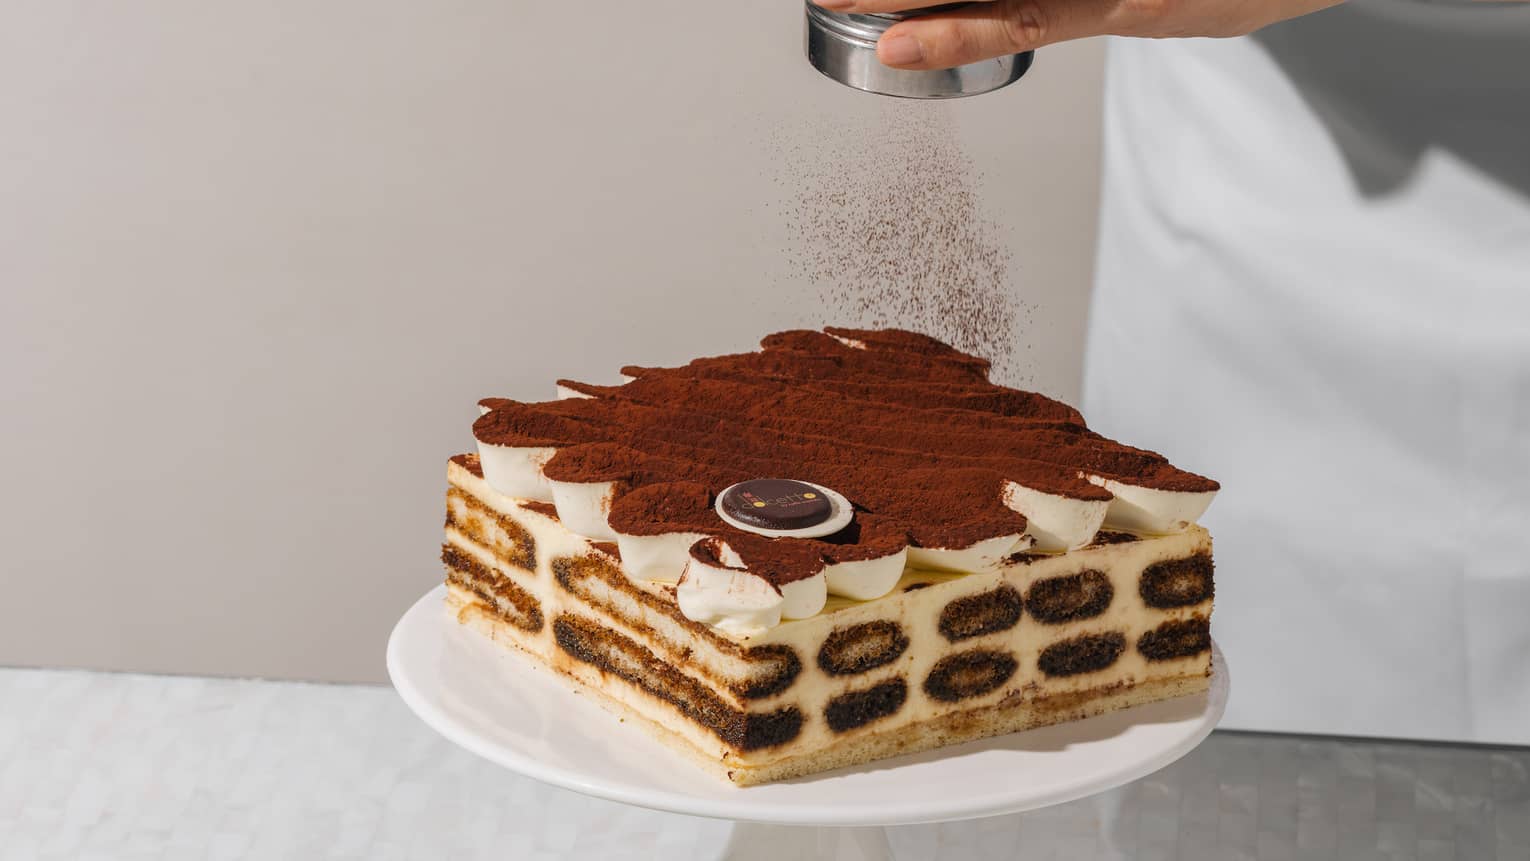 Chef dusts cocoa powder on top of a tiramisu cake